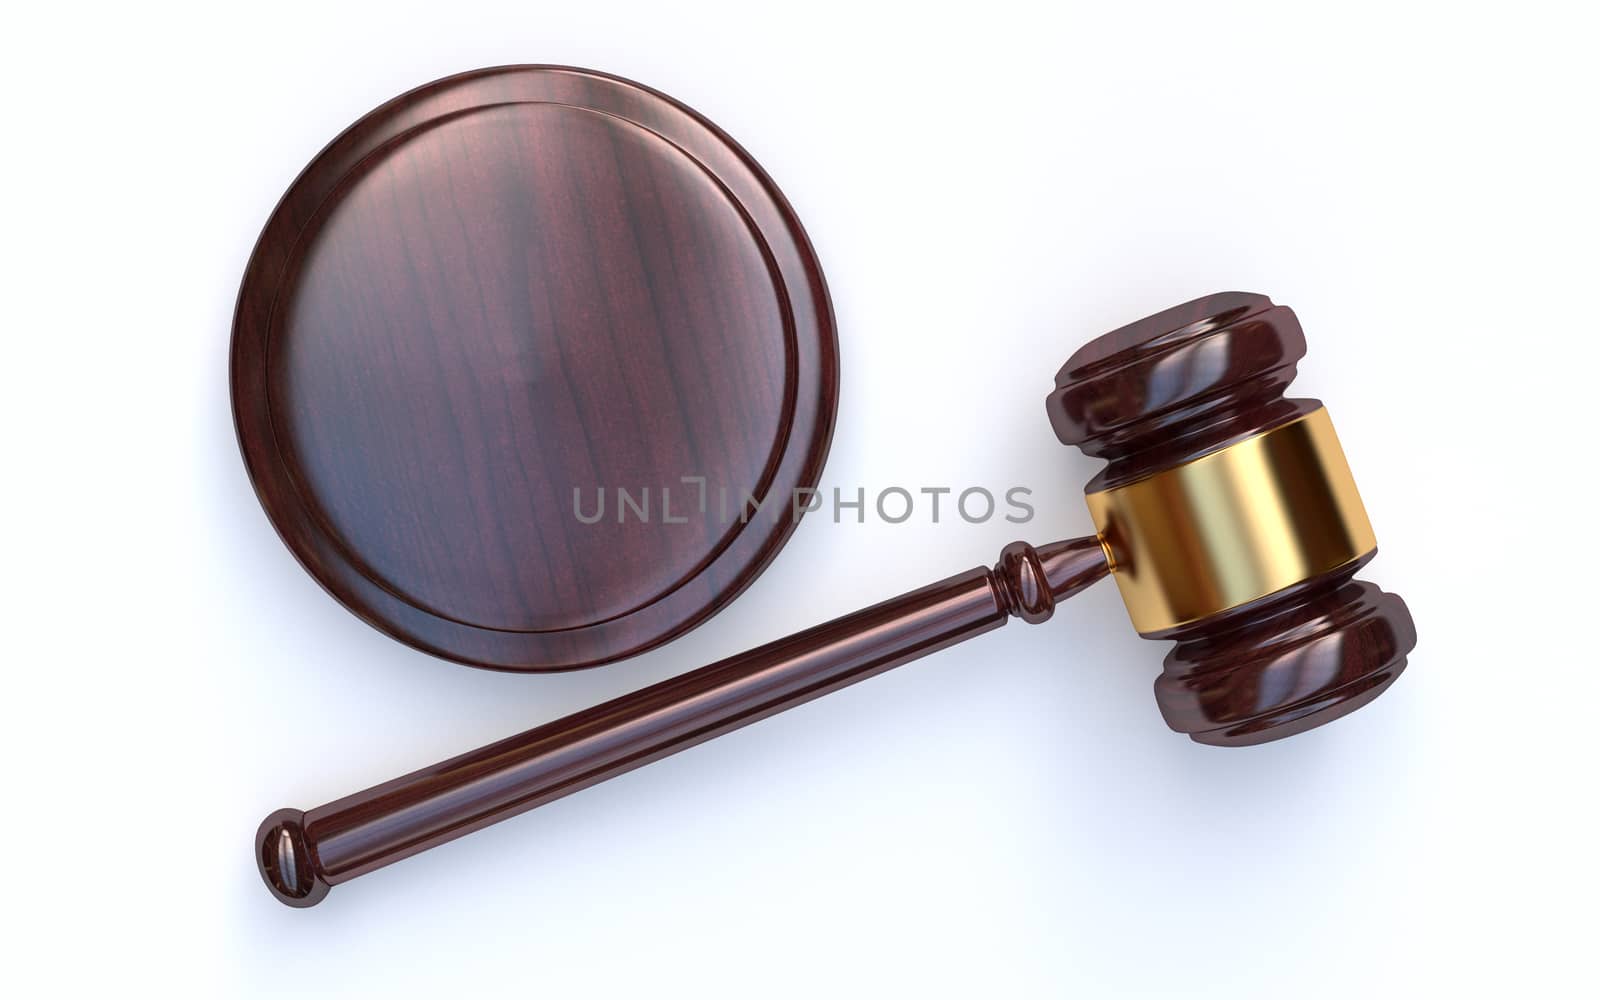 Judge, wooden gavel on white background 